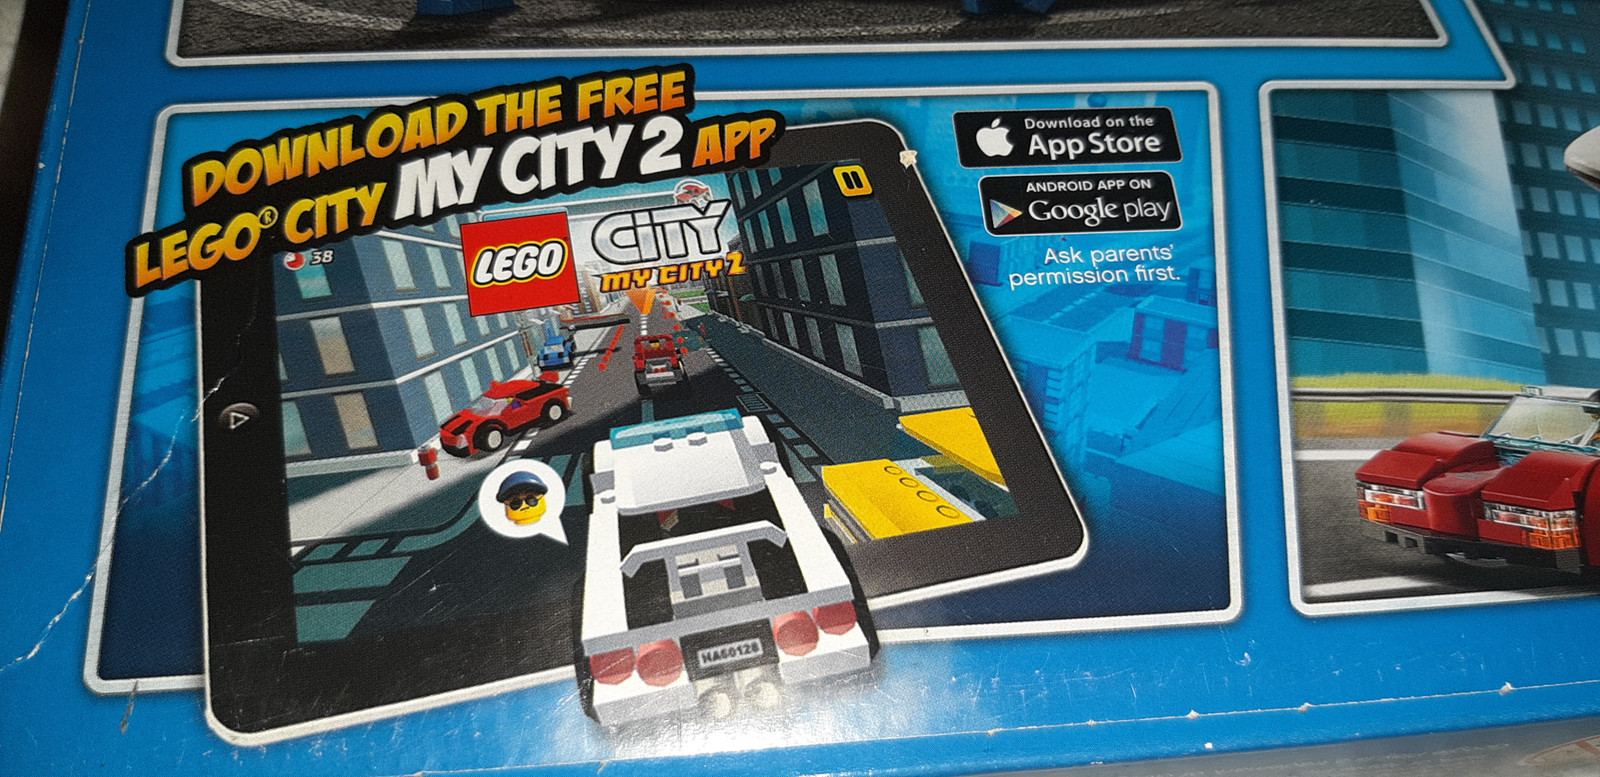 Lego City My City 2 App Store Cheap Online